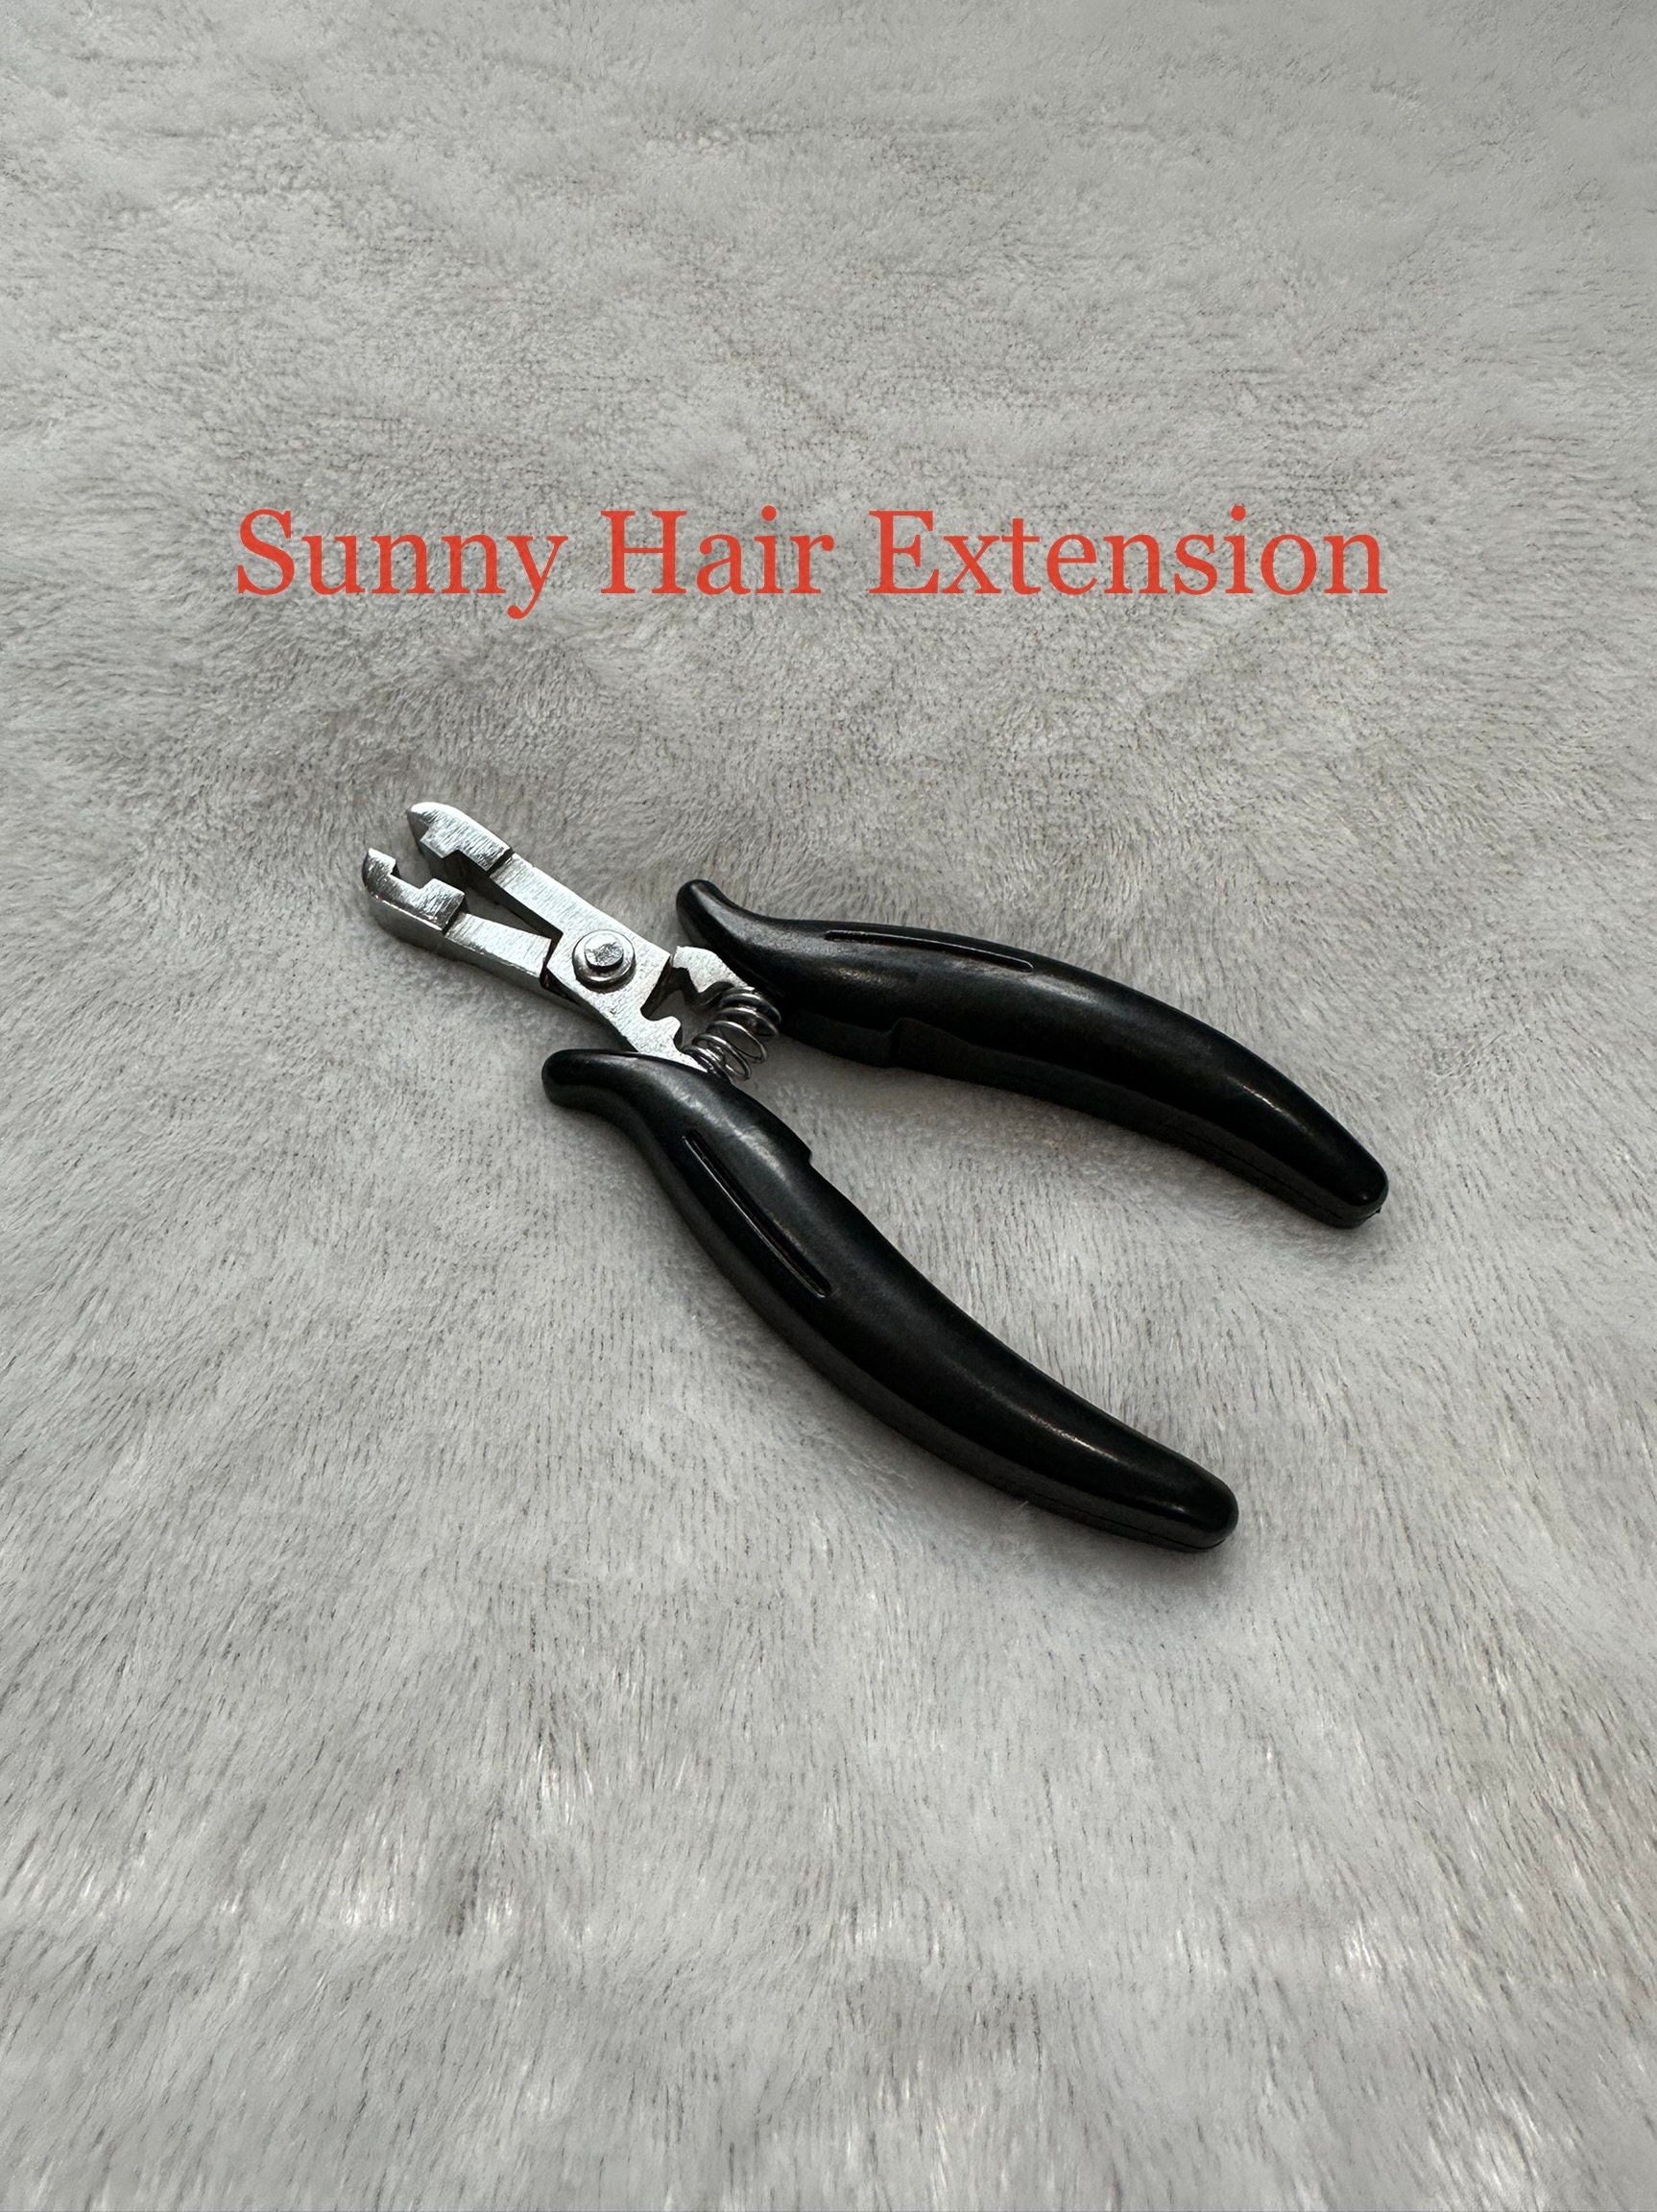 U-shape Plier Fusion Bond Crusher Tool for Keratin Hair Extensions